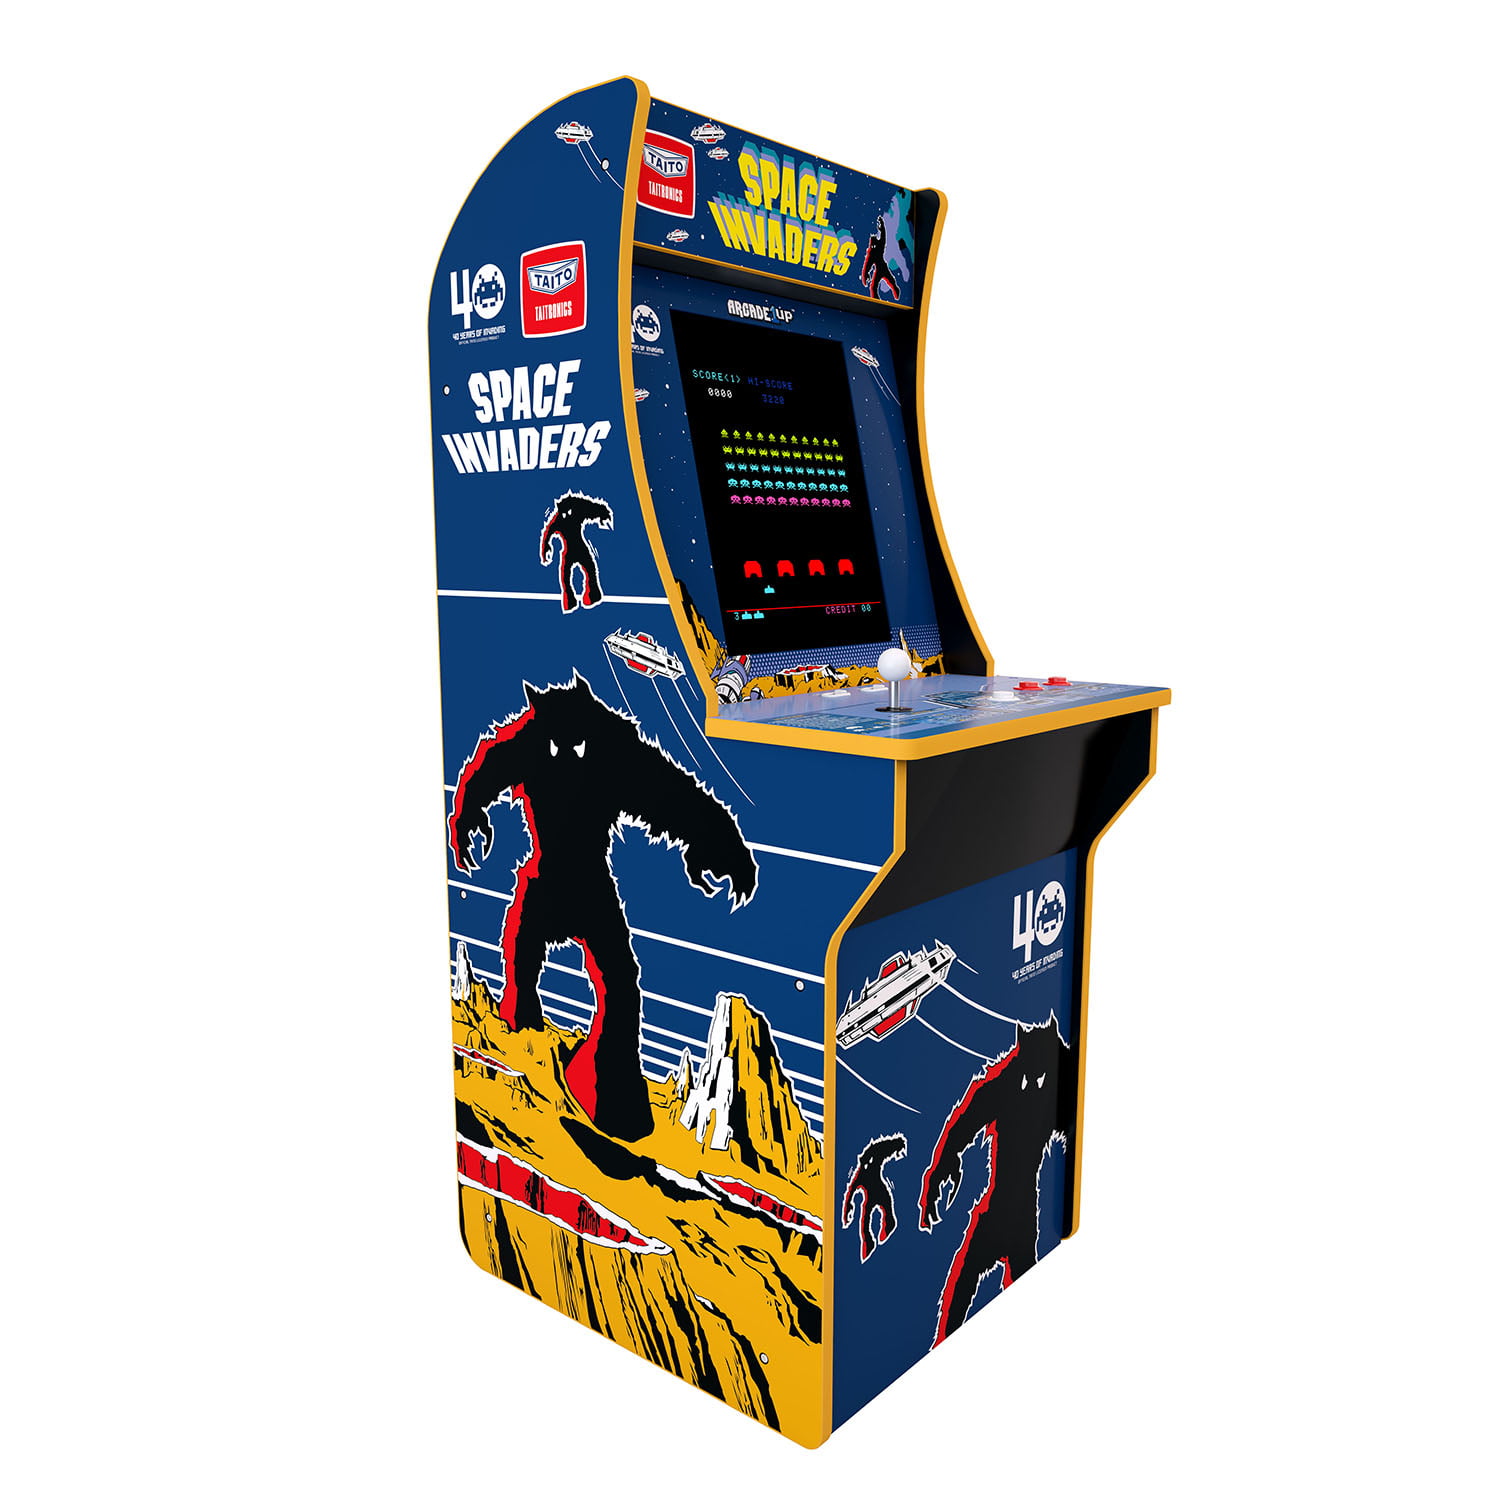 Игровой автомат пун пон. Space Invaders игровой автомат. Space Invaders Arcade Machine. Spielautomat Arcade 1up. Arcade1up Retro Spielautomat.